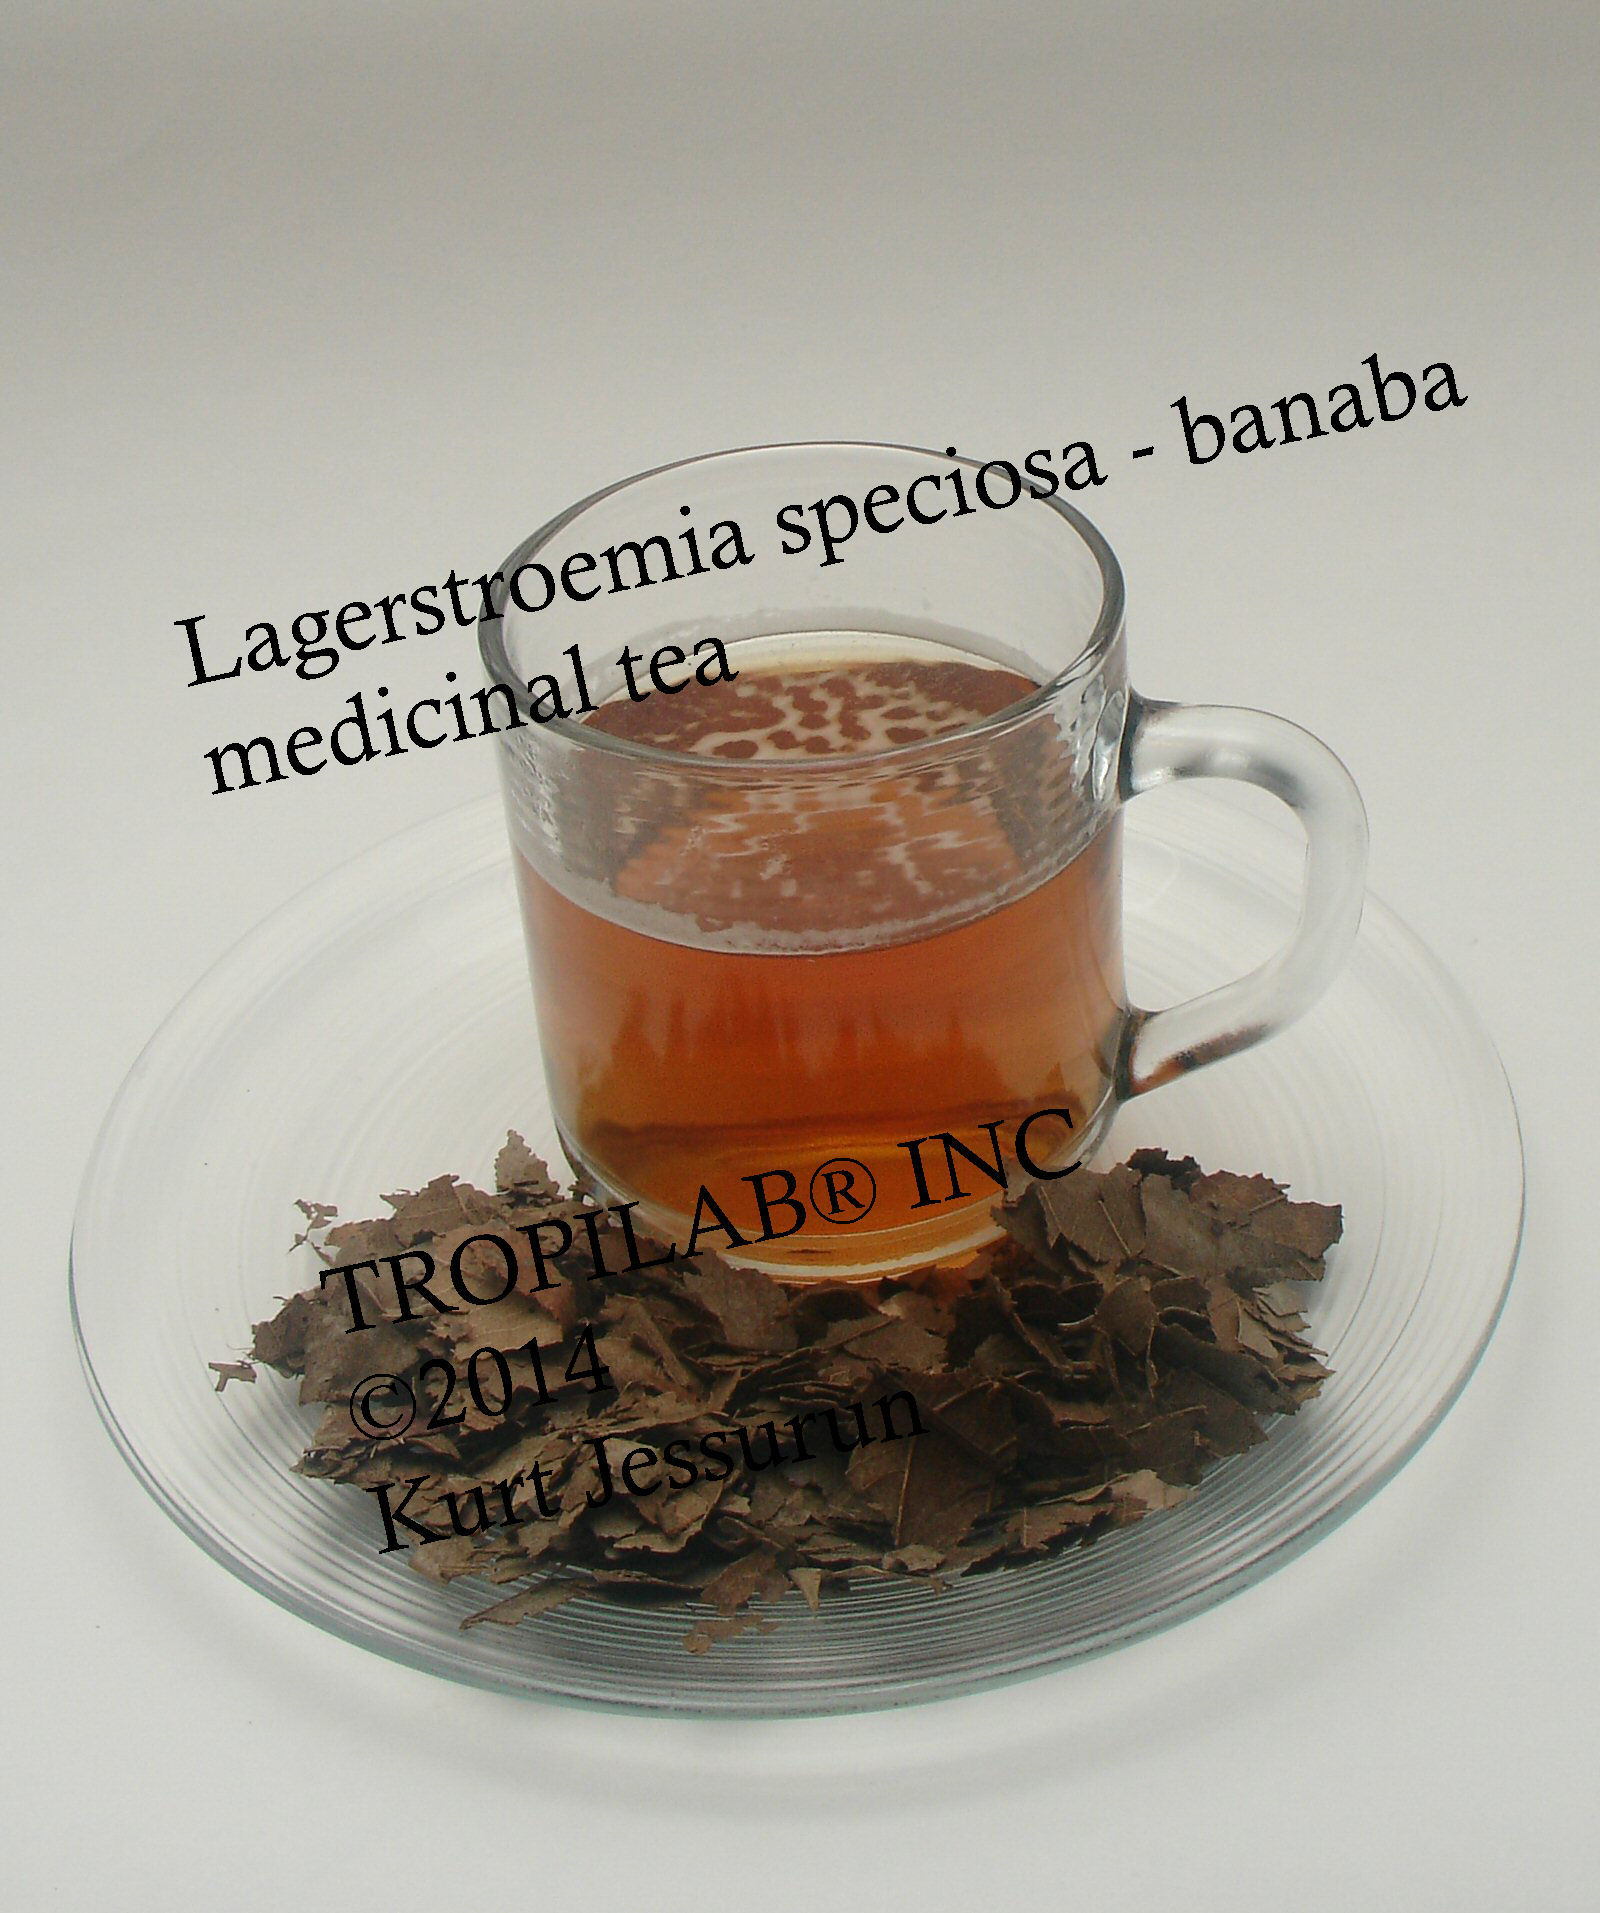 Banaba,Lagerstroemia speciosa herbal tea - Tropilab